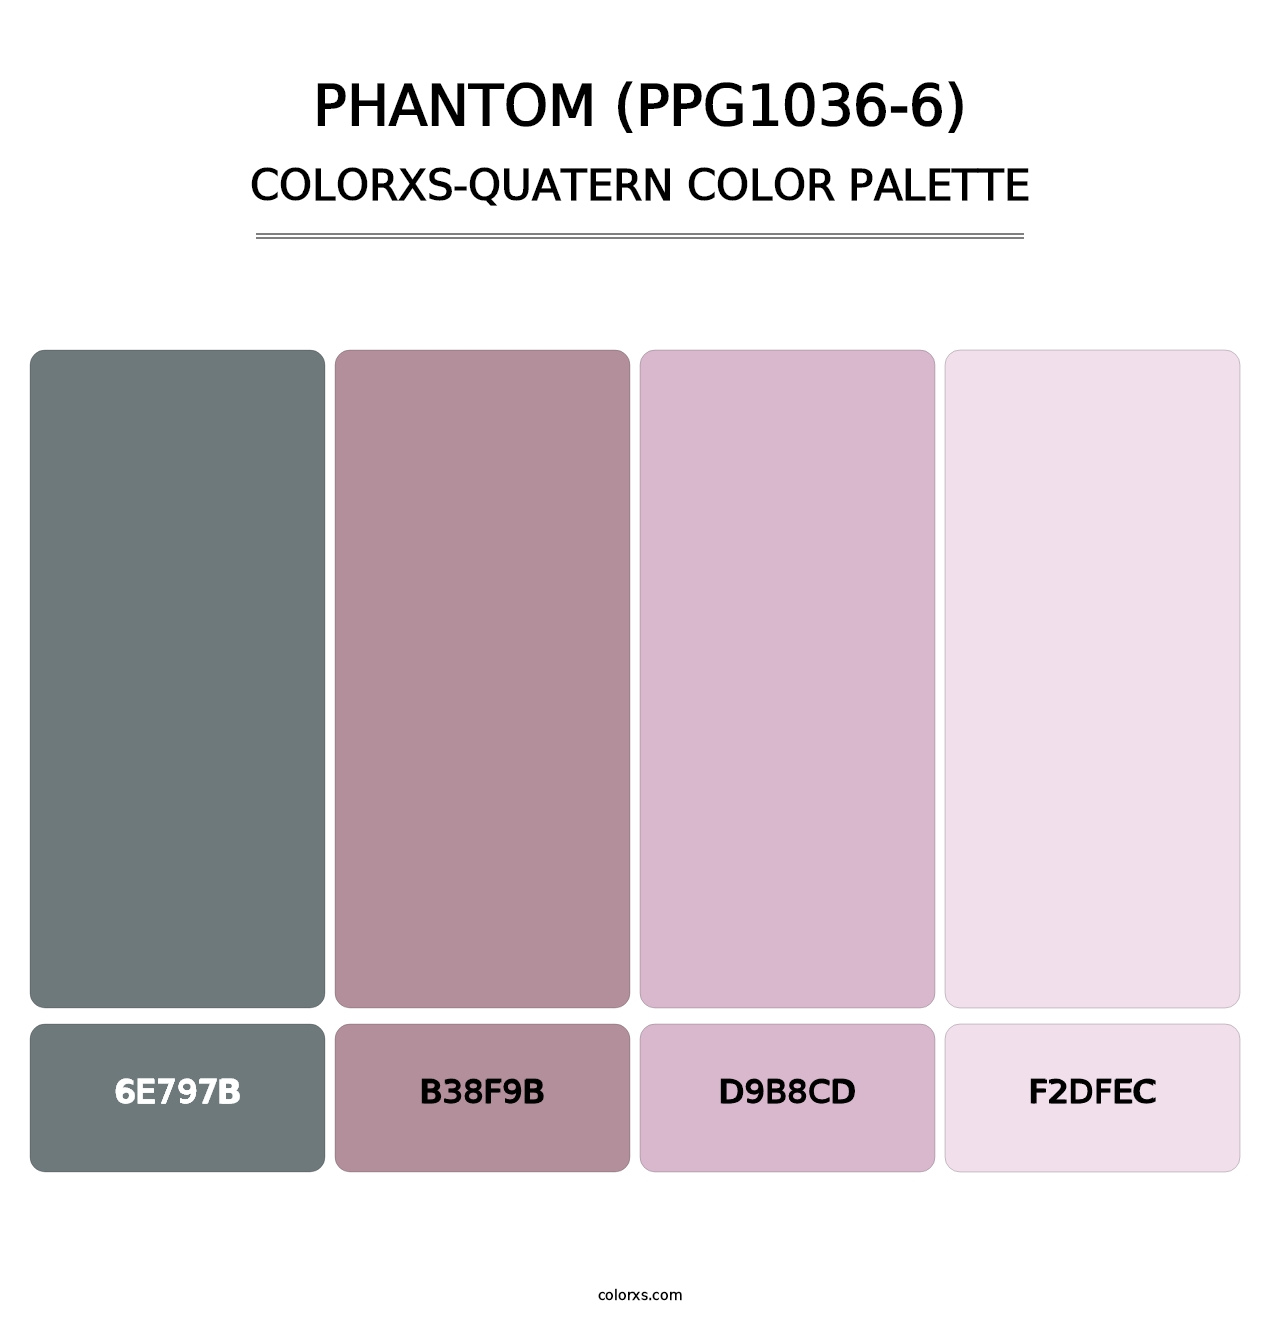 Phantom (PPG1036-6) - Colorxs Quatern Palette